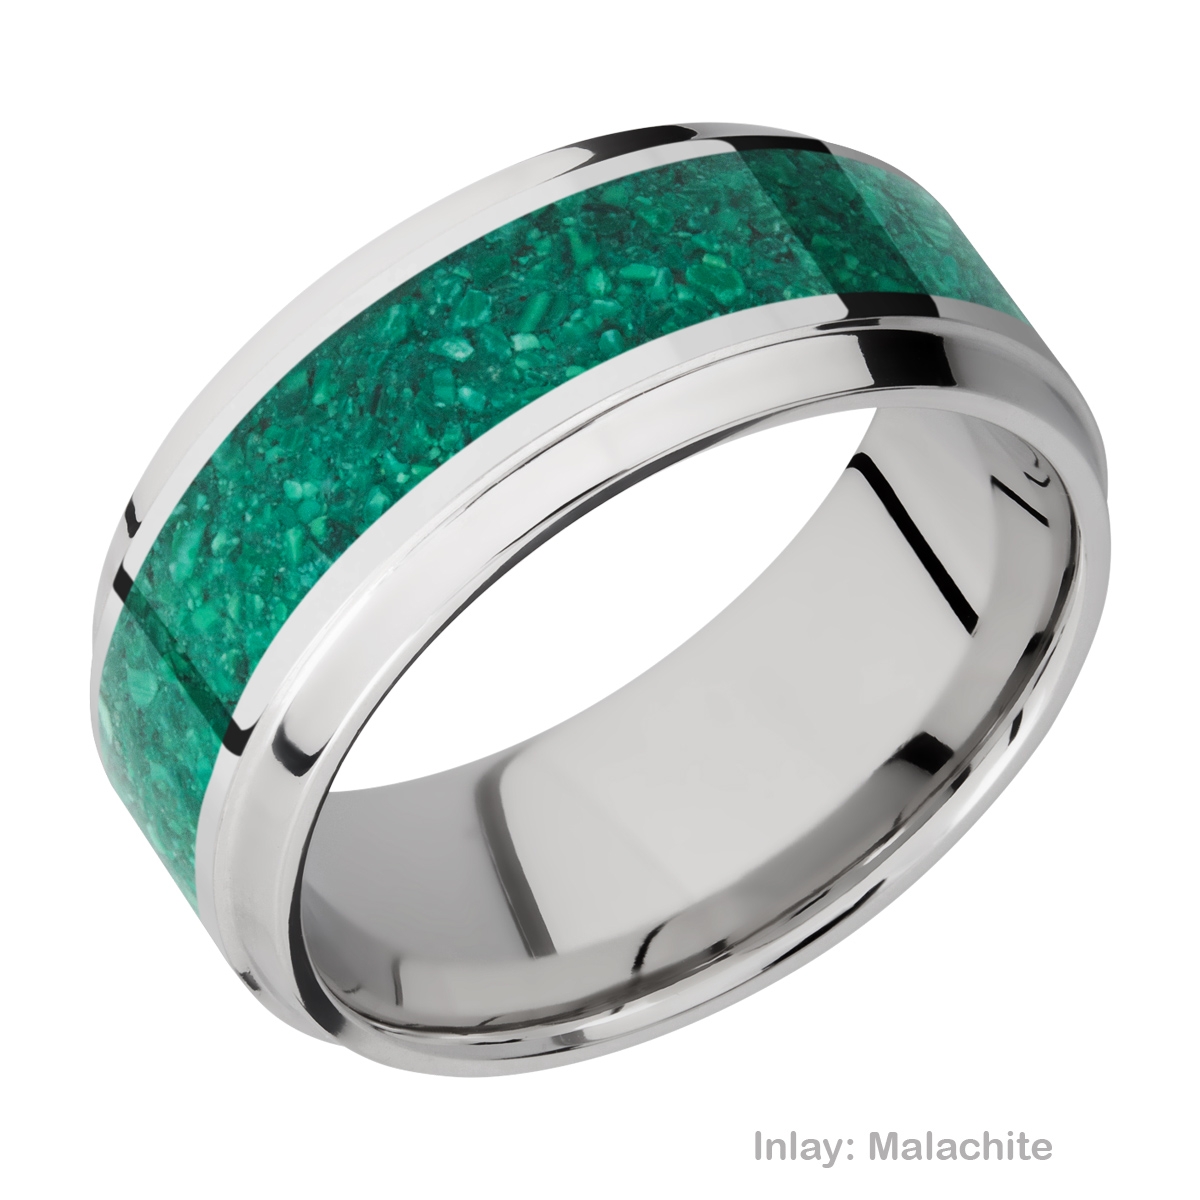 Lashbrook CC9B15(S)/MOSAIC Cobalt Chrome Wedding Ring or Band